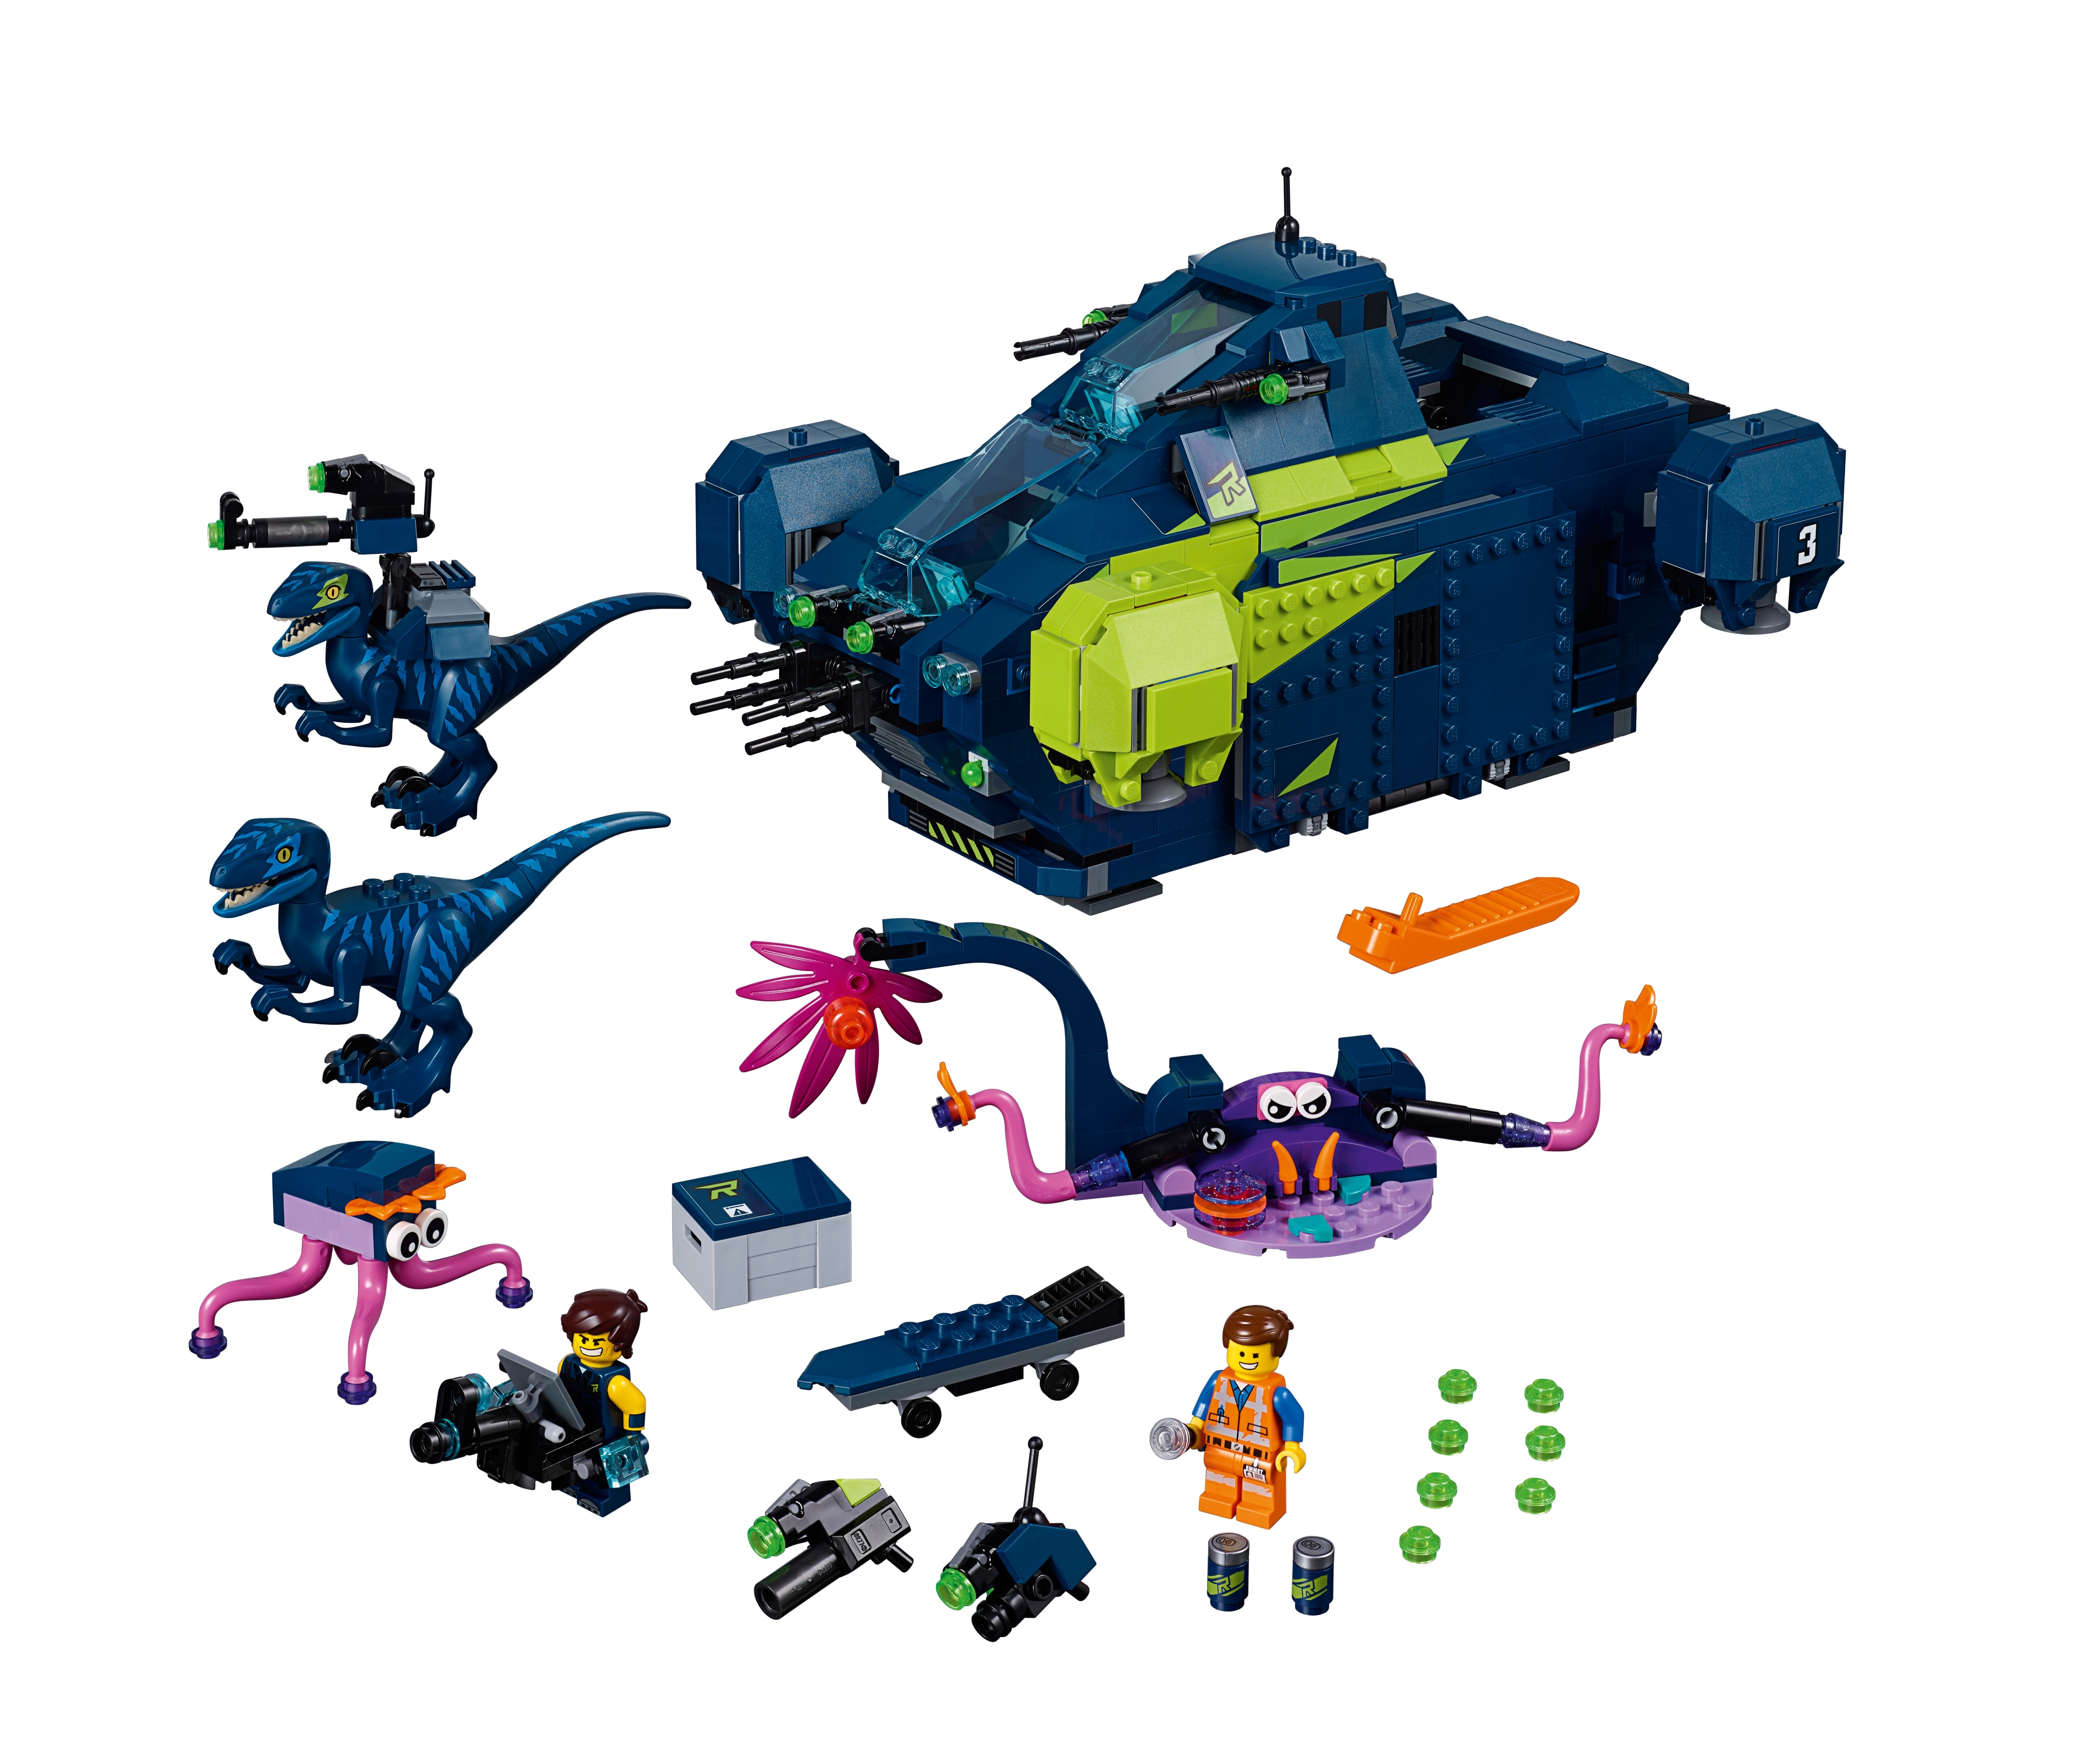 Rex's Rexplorer! 70835 | THE LEGO® MOVIE 2™ | online at the Official LEGO® Shop